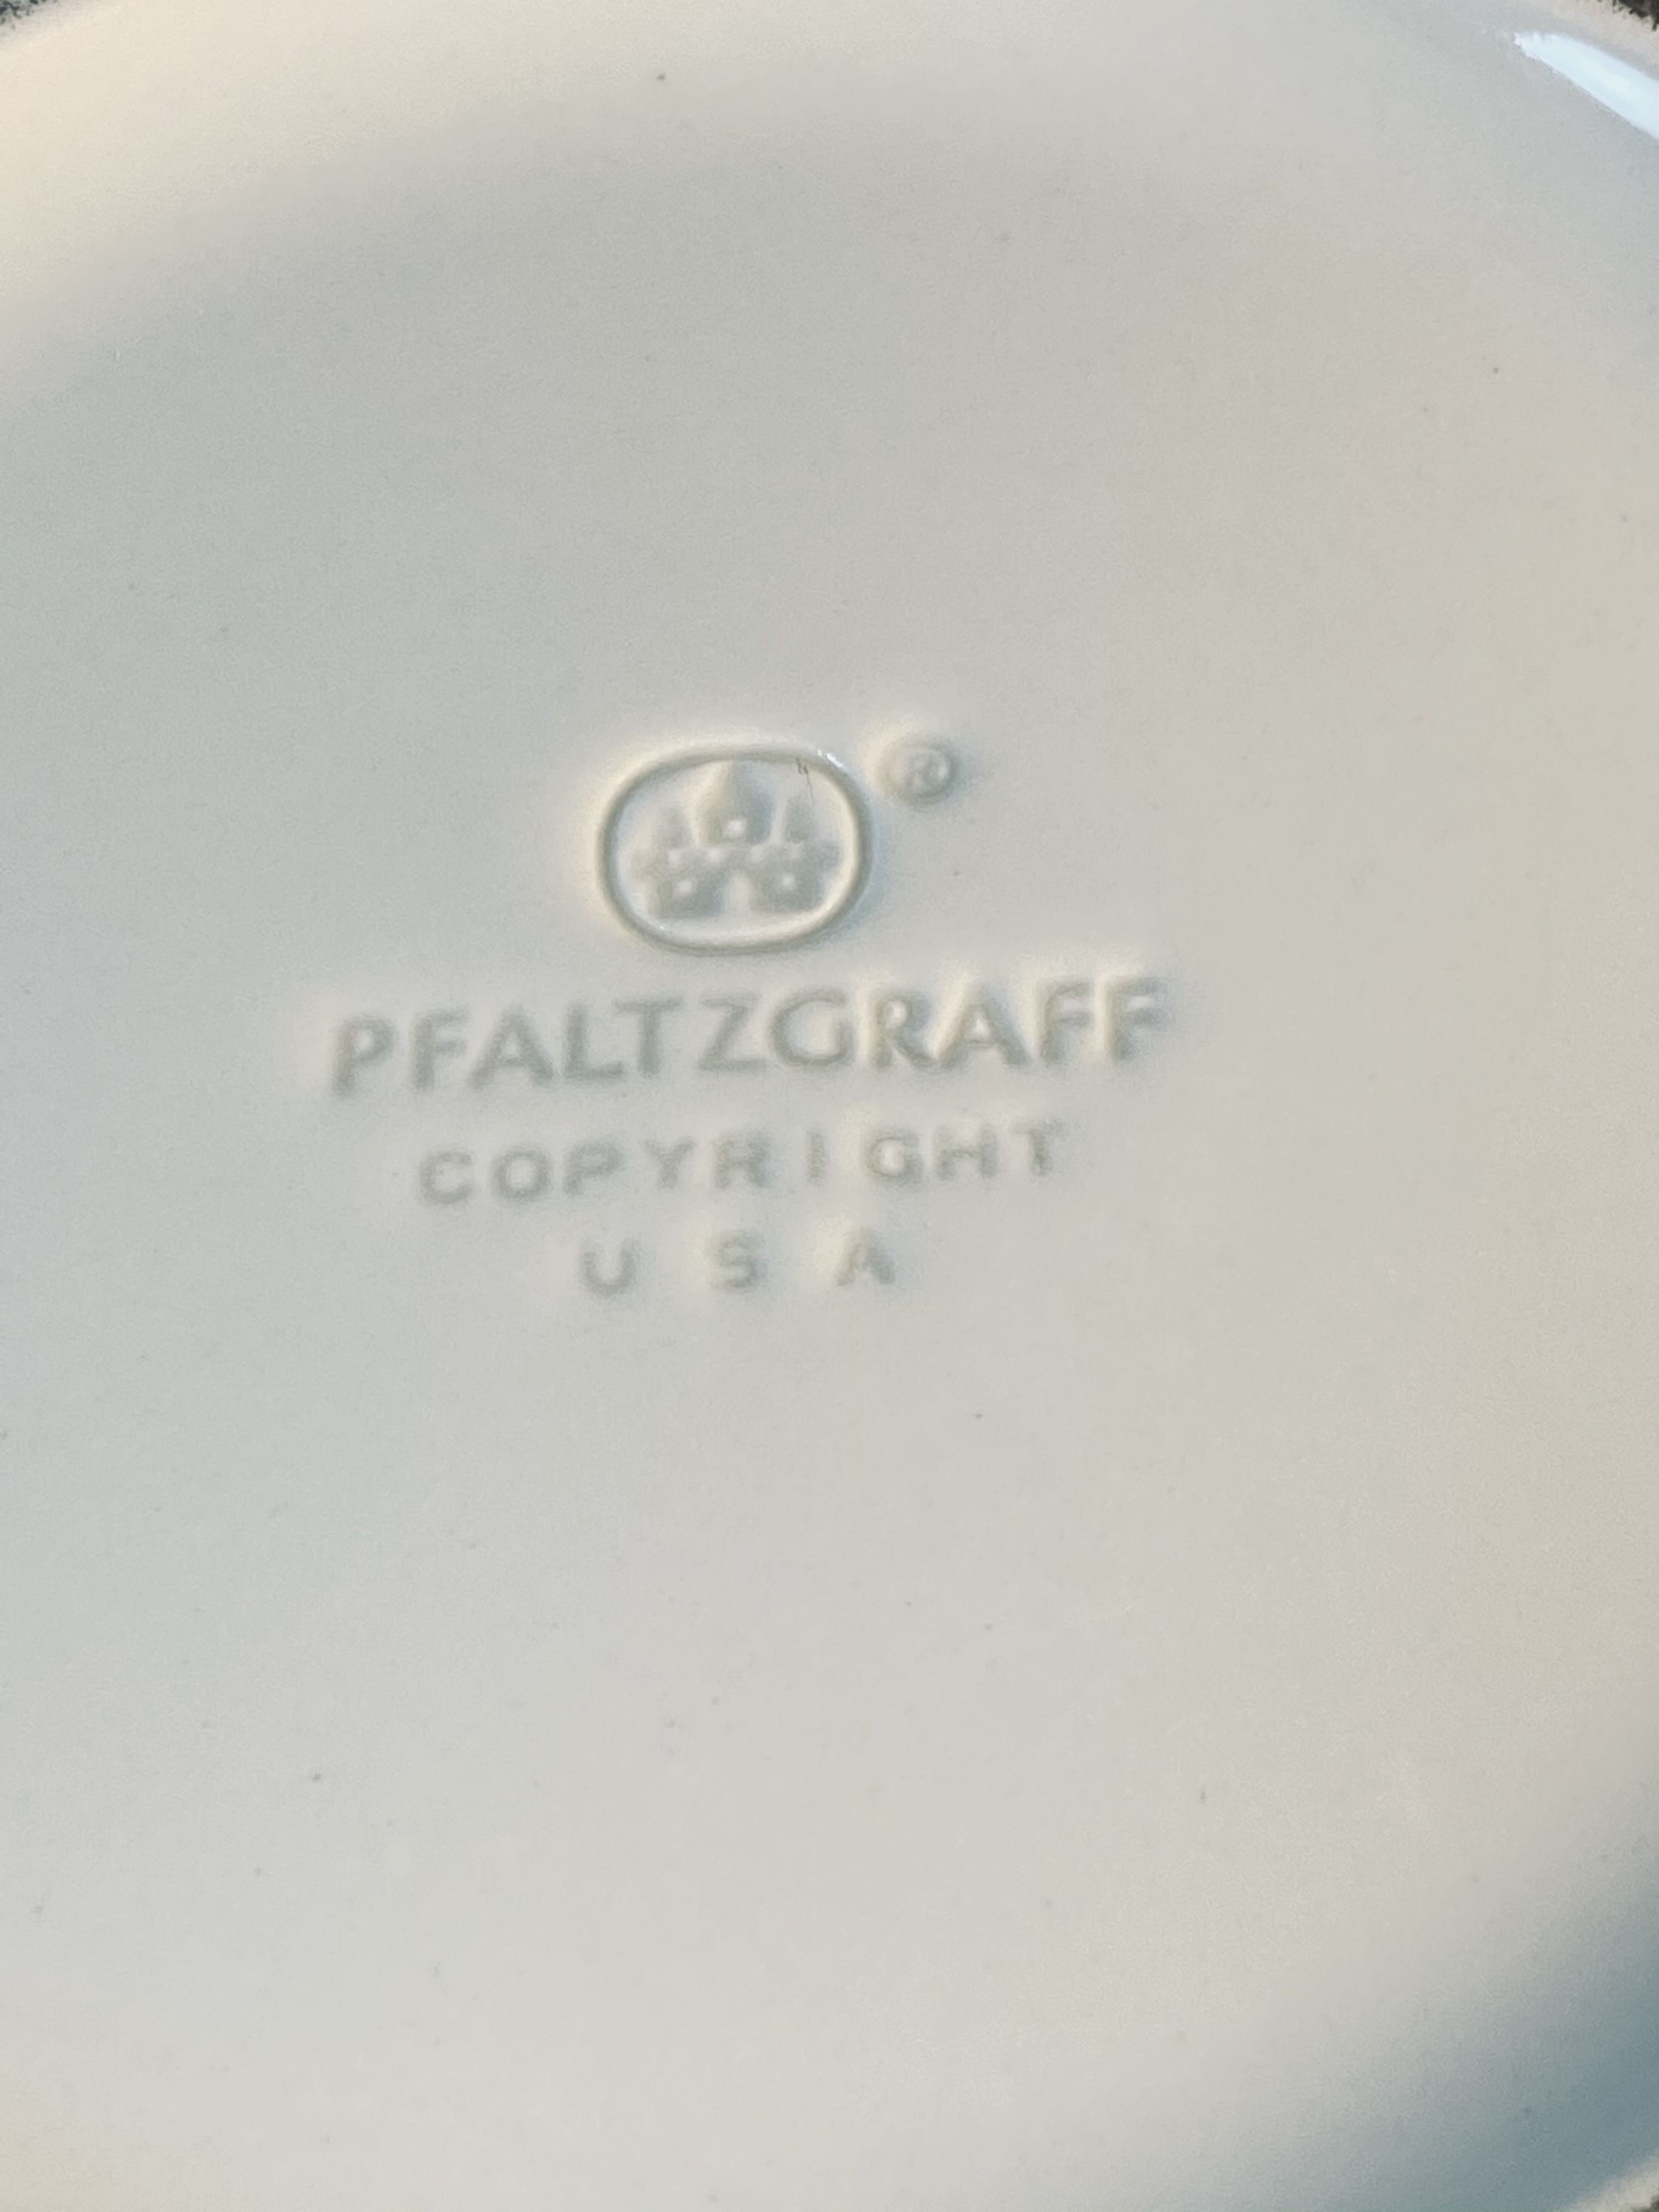 Pfaltzgraff Cream Oval Serving Bowl Serving Dish. frnt cab